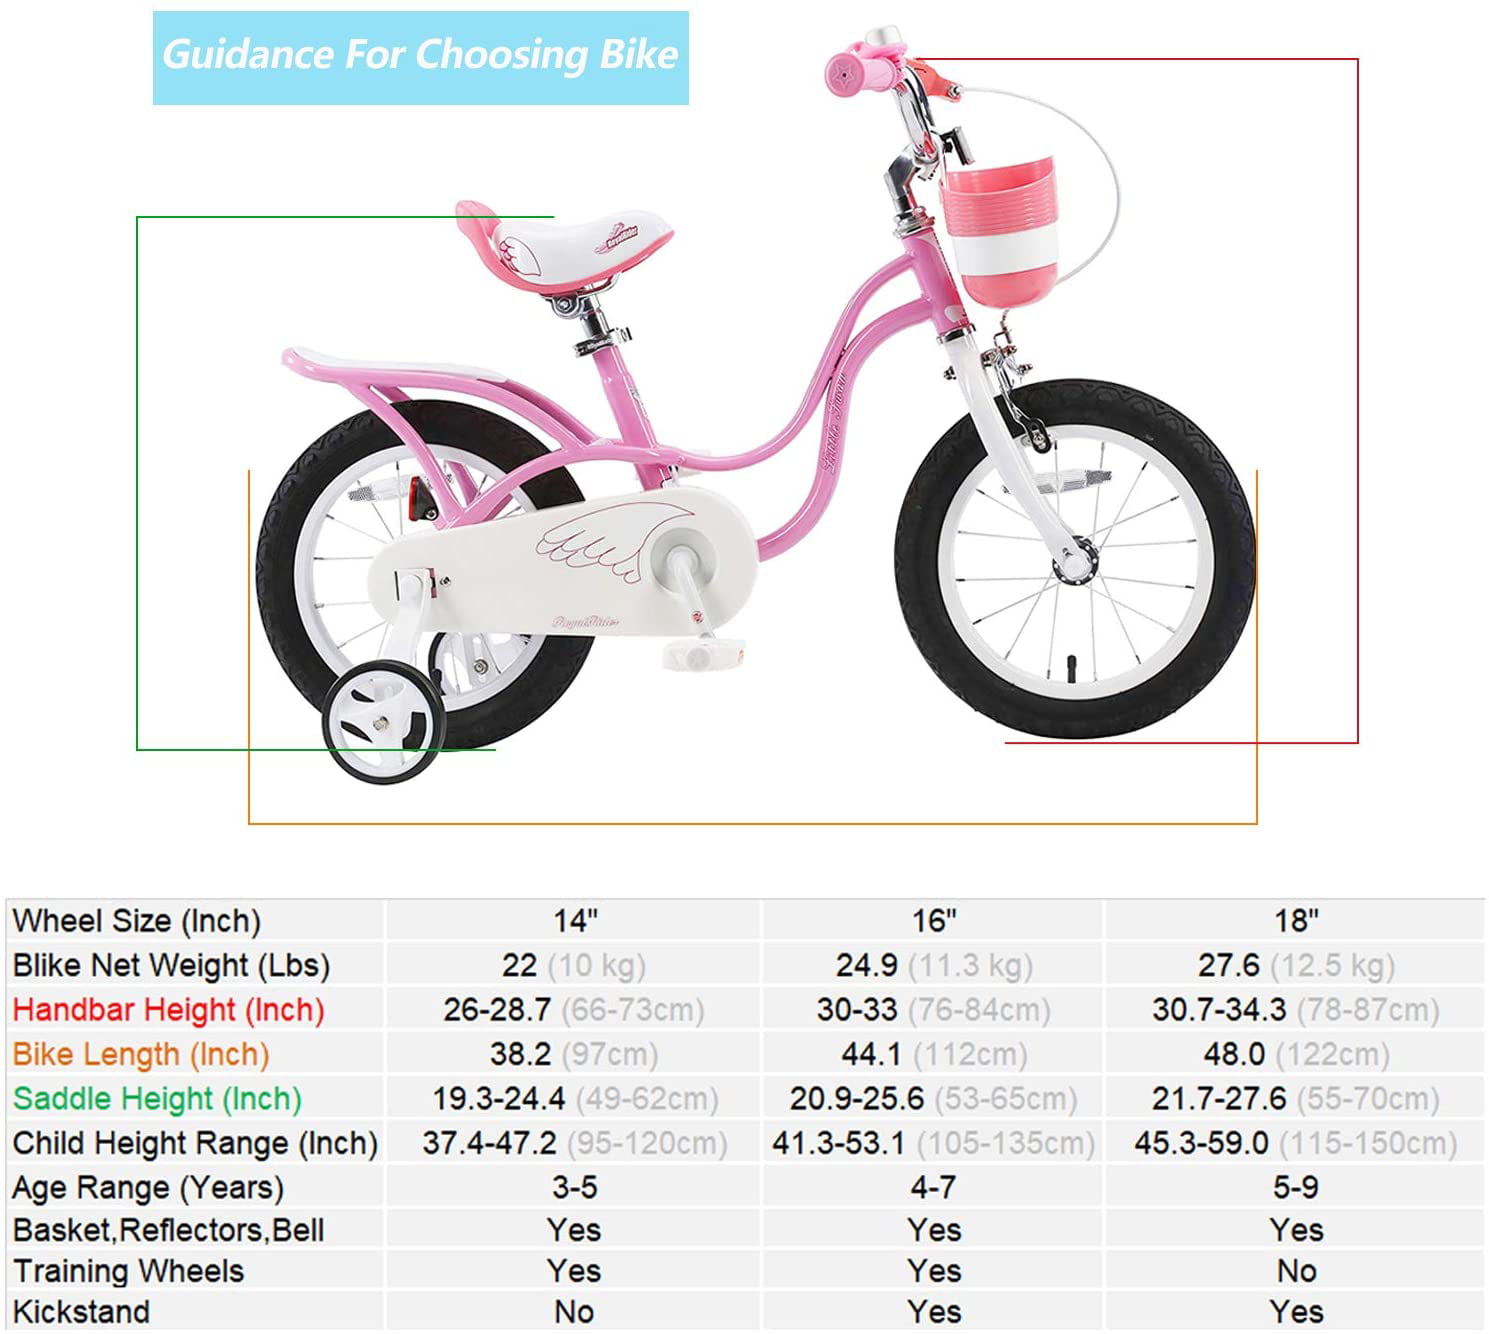 LOL Surprise Girl Bike 18 Inch Front Brake on Handlebar and Rear Coasterbrake Basket Pink 95% Assembled